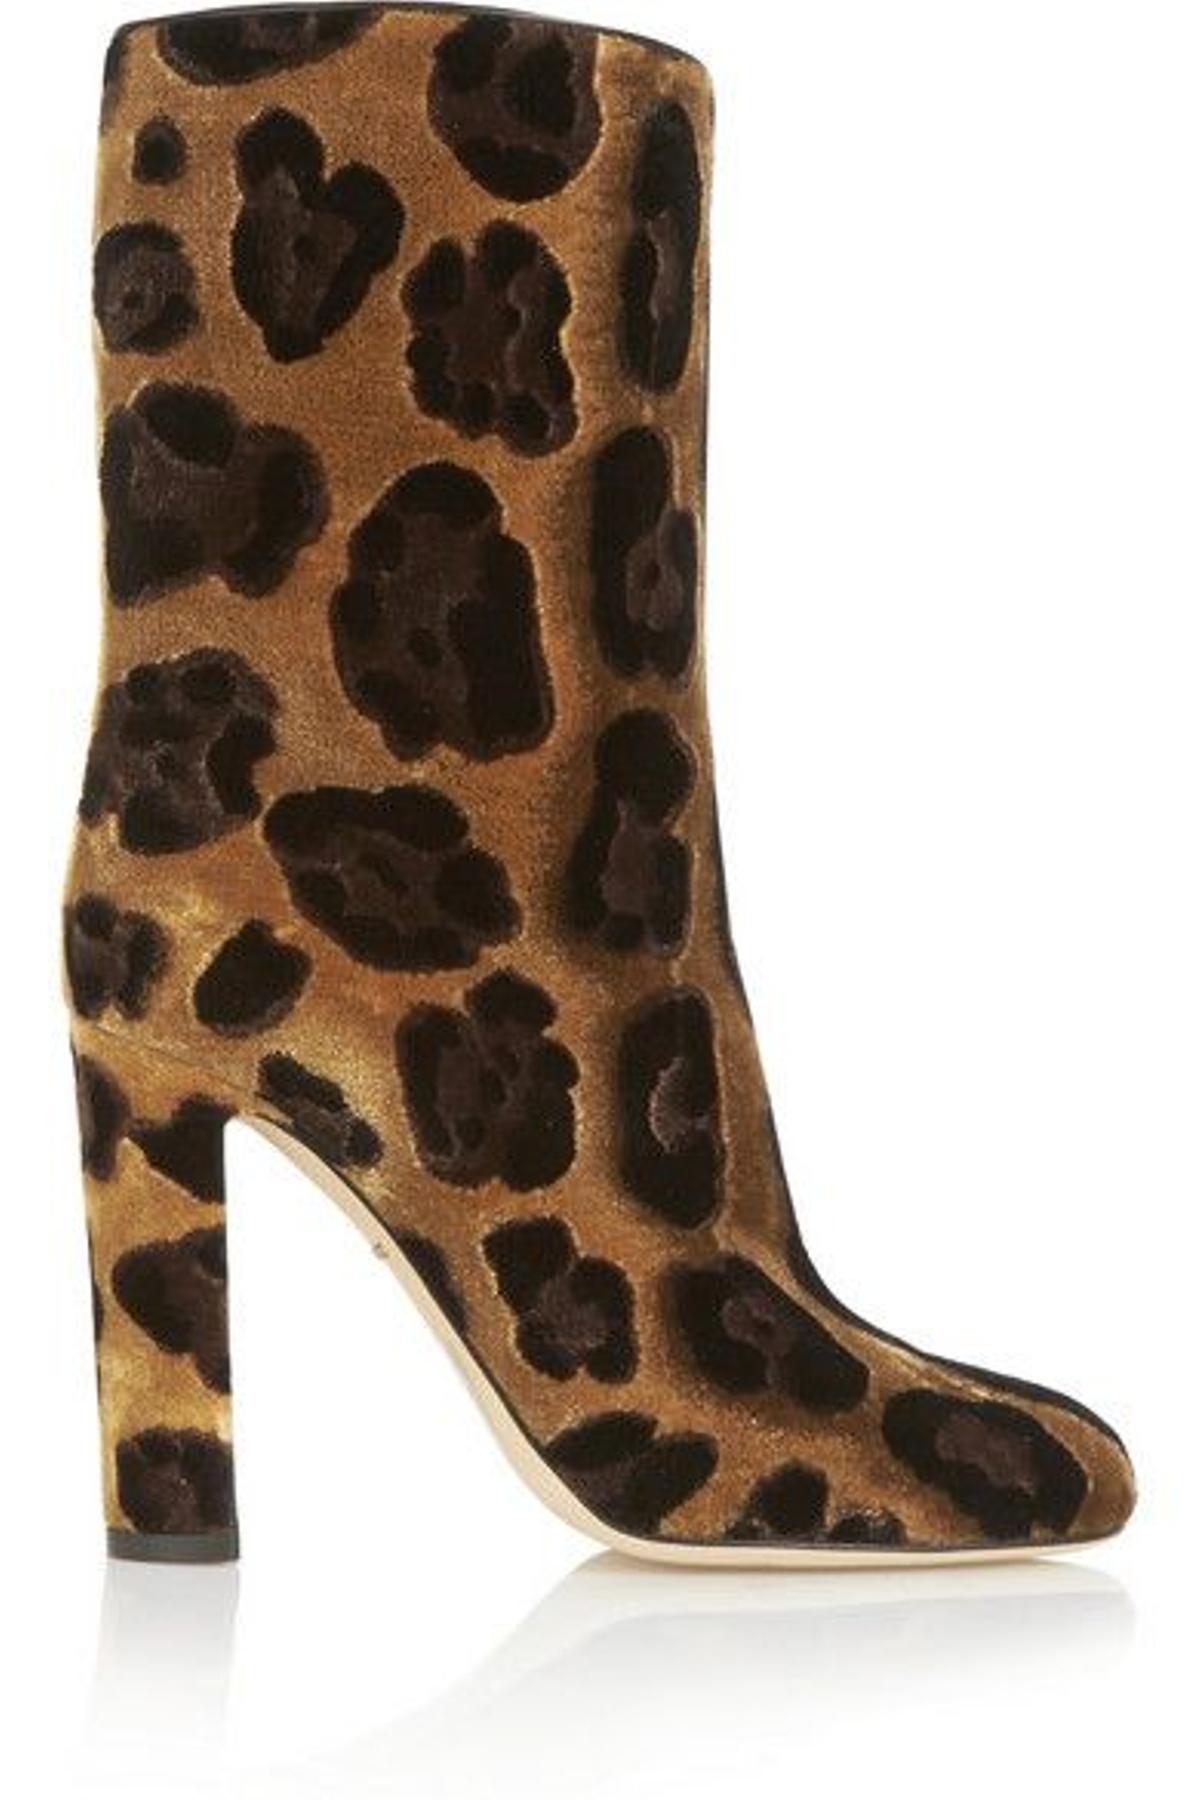 Botín de print animal y leopardo, Dolce &amp; Gabbana (675€)